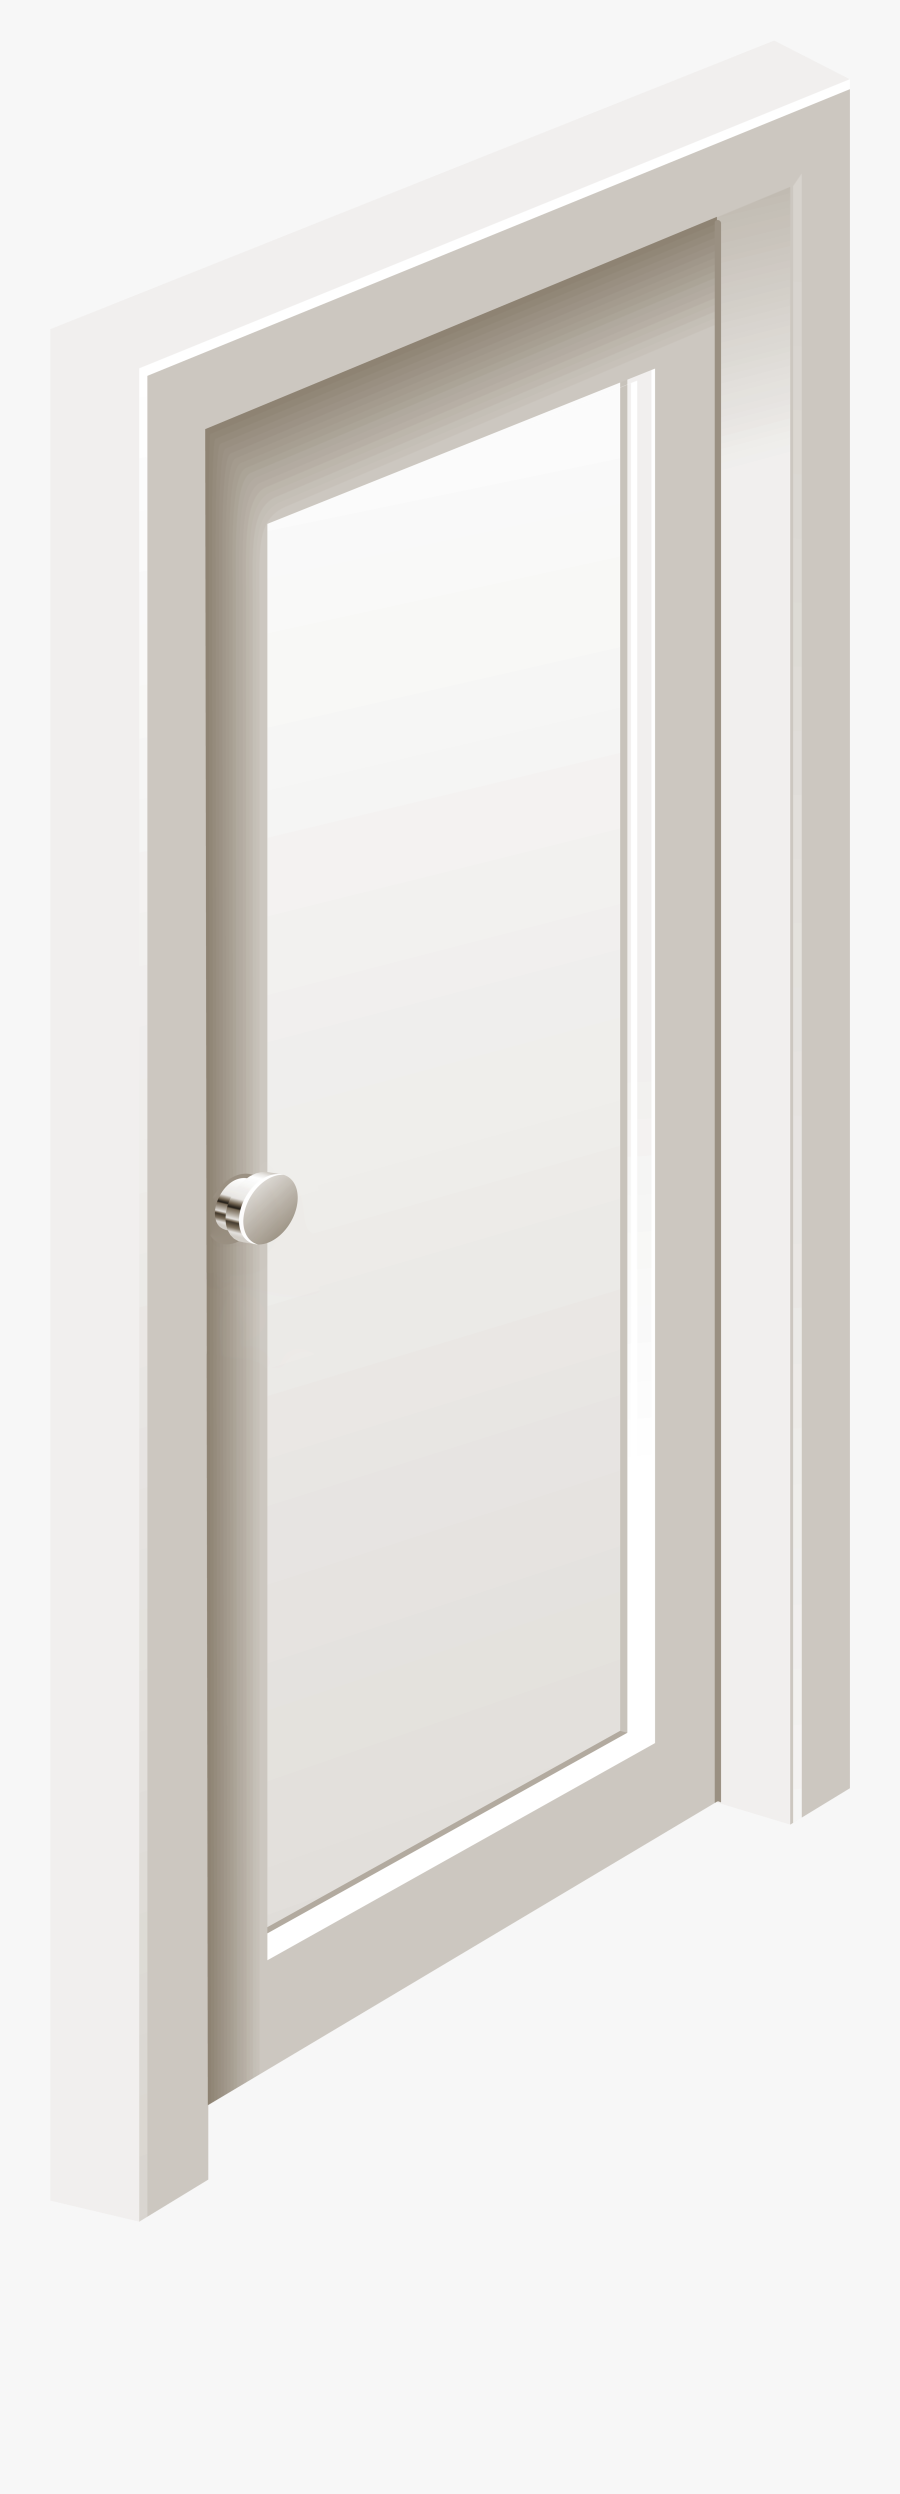 White Door Png Clip Art - Column, Transparent Clipart